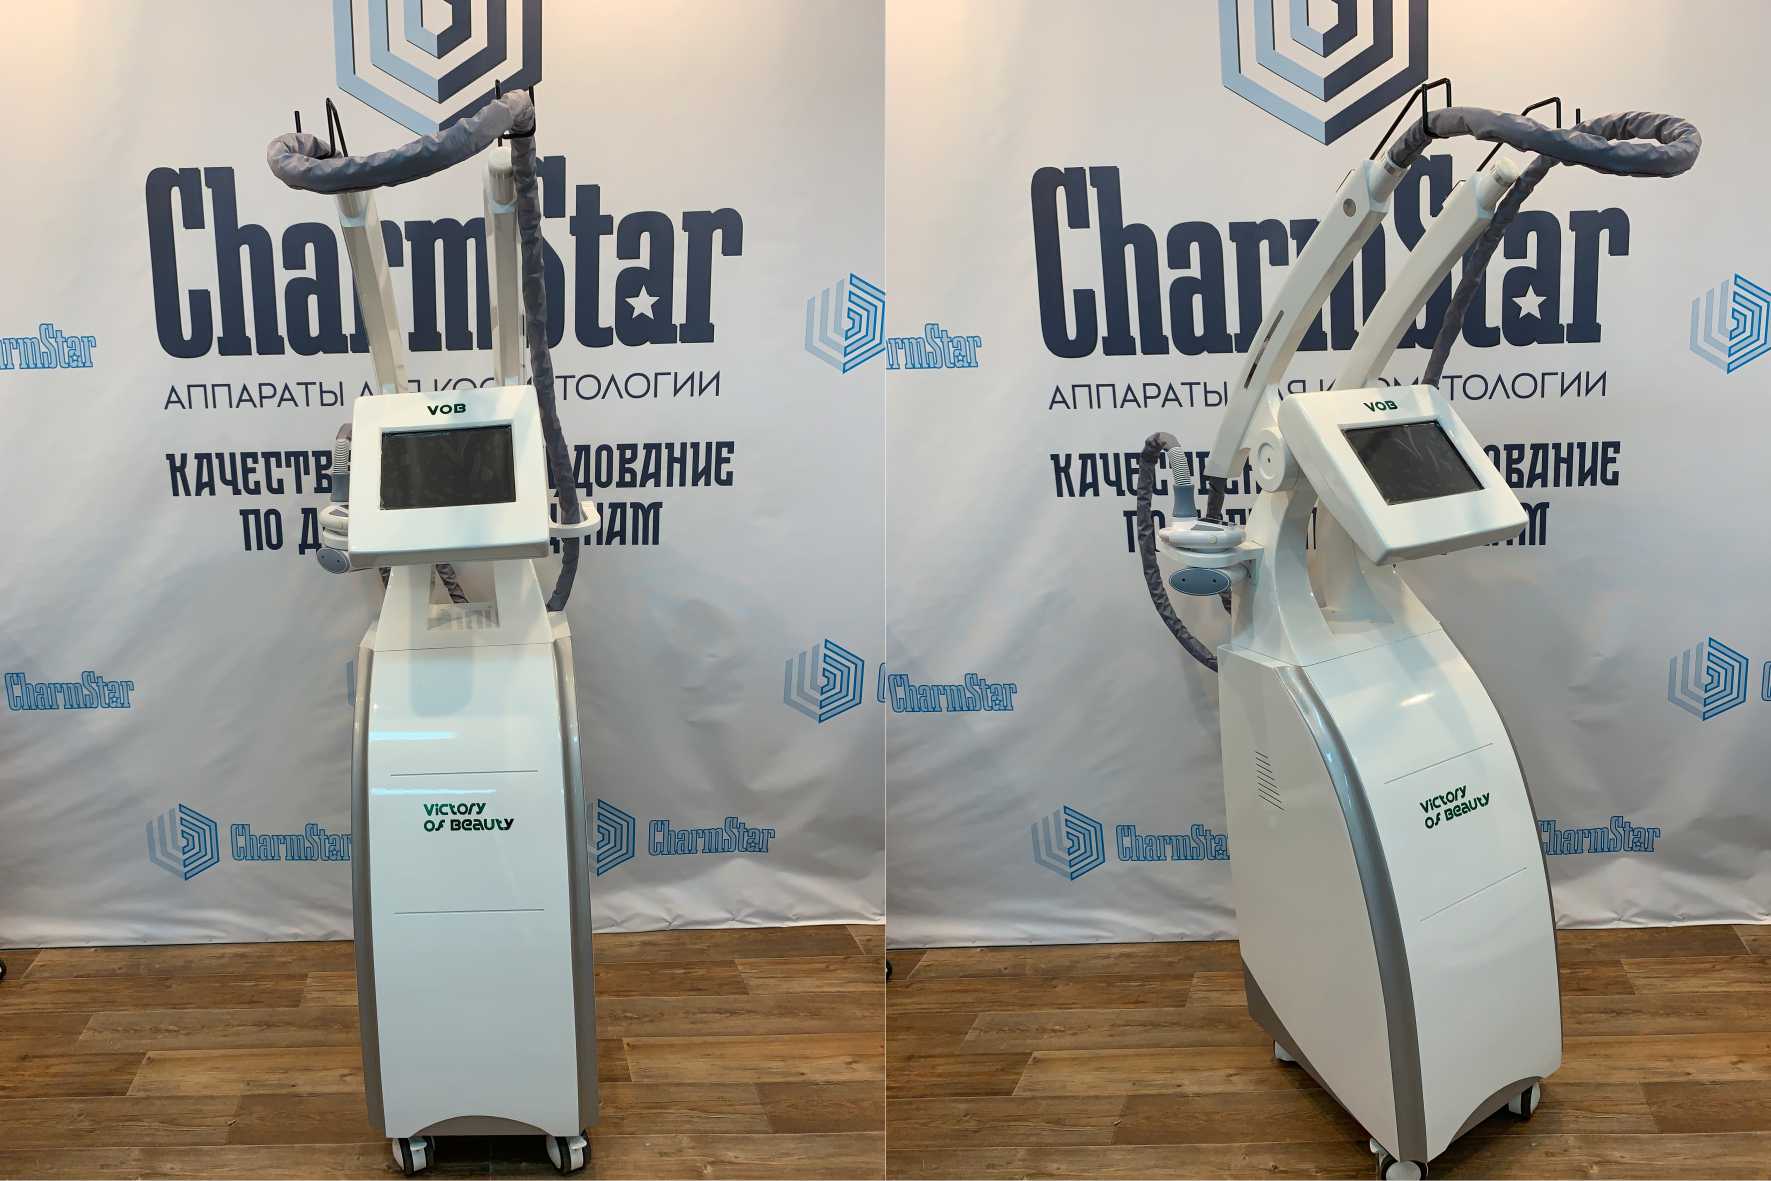 Аппарат  Charmstar M500 для эстетического массажа